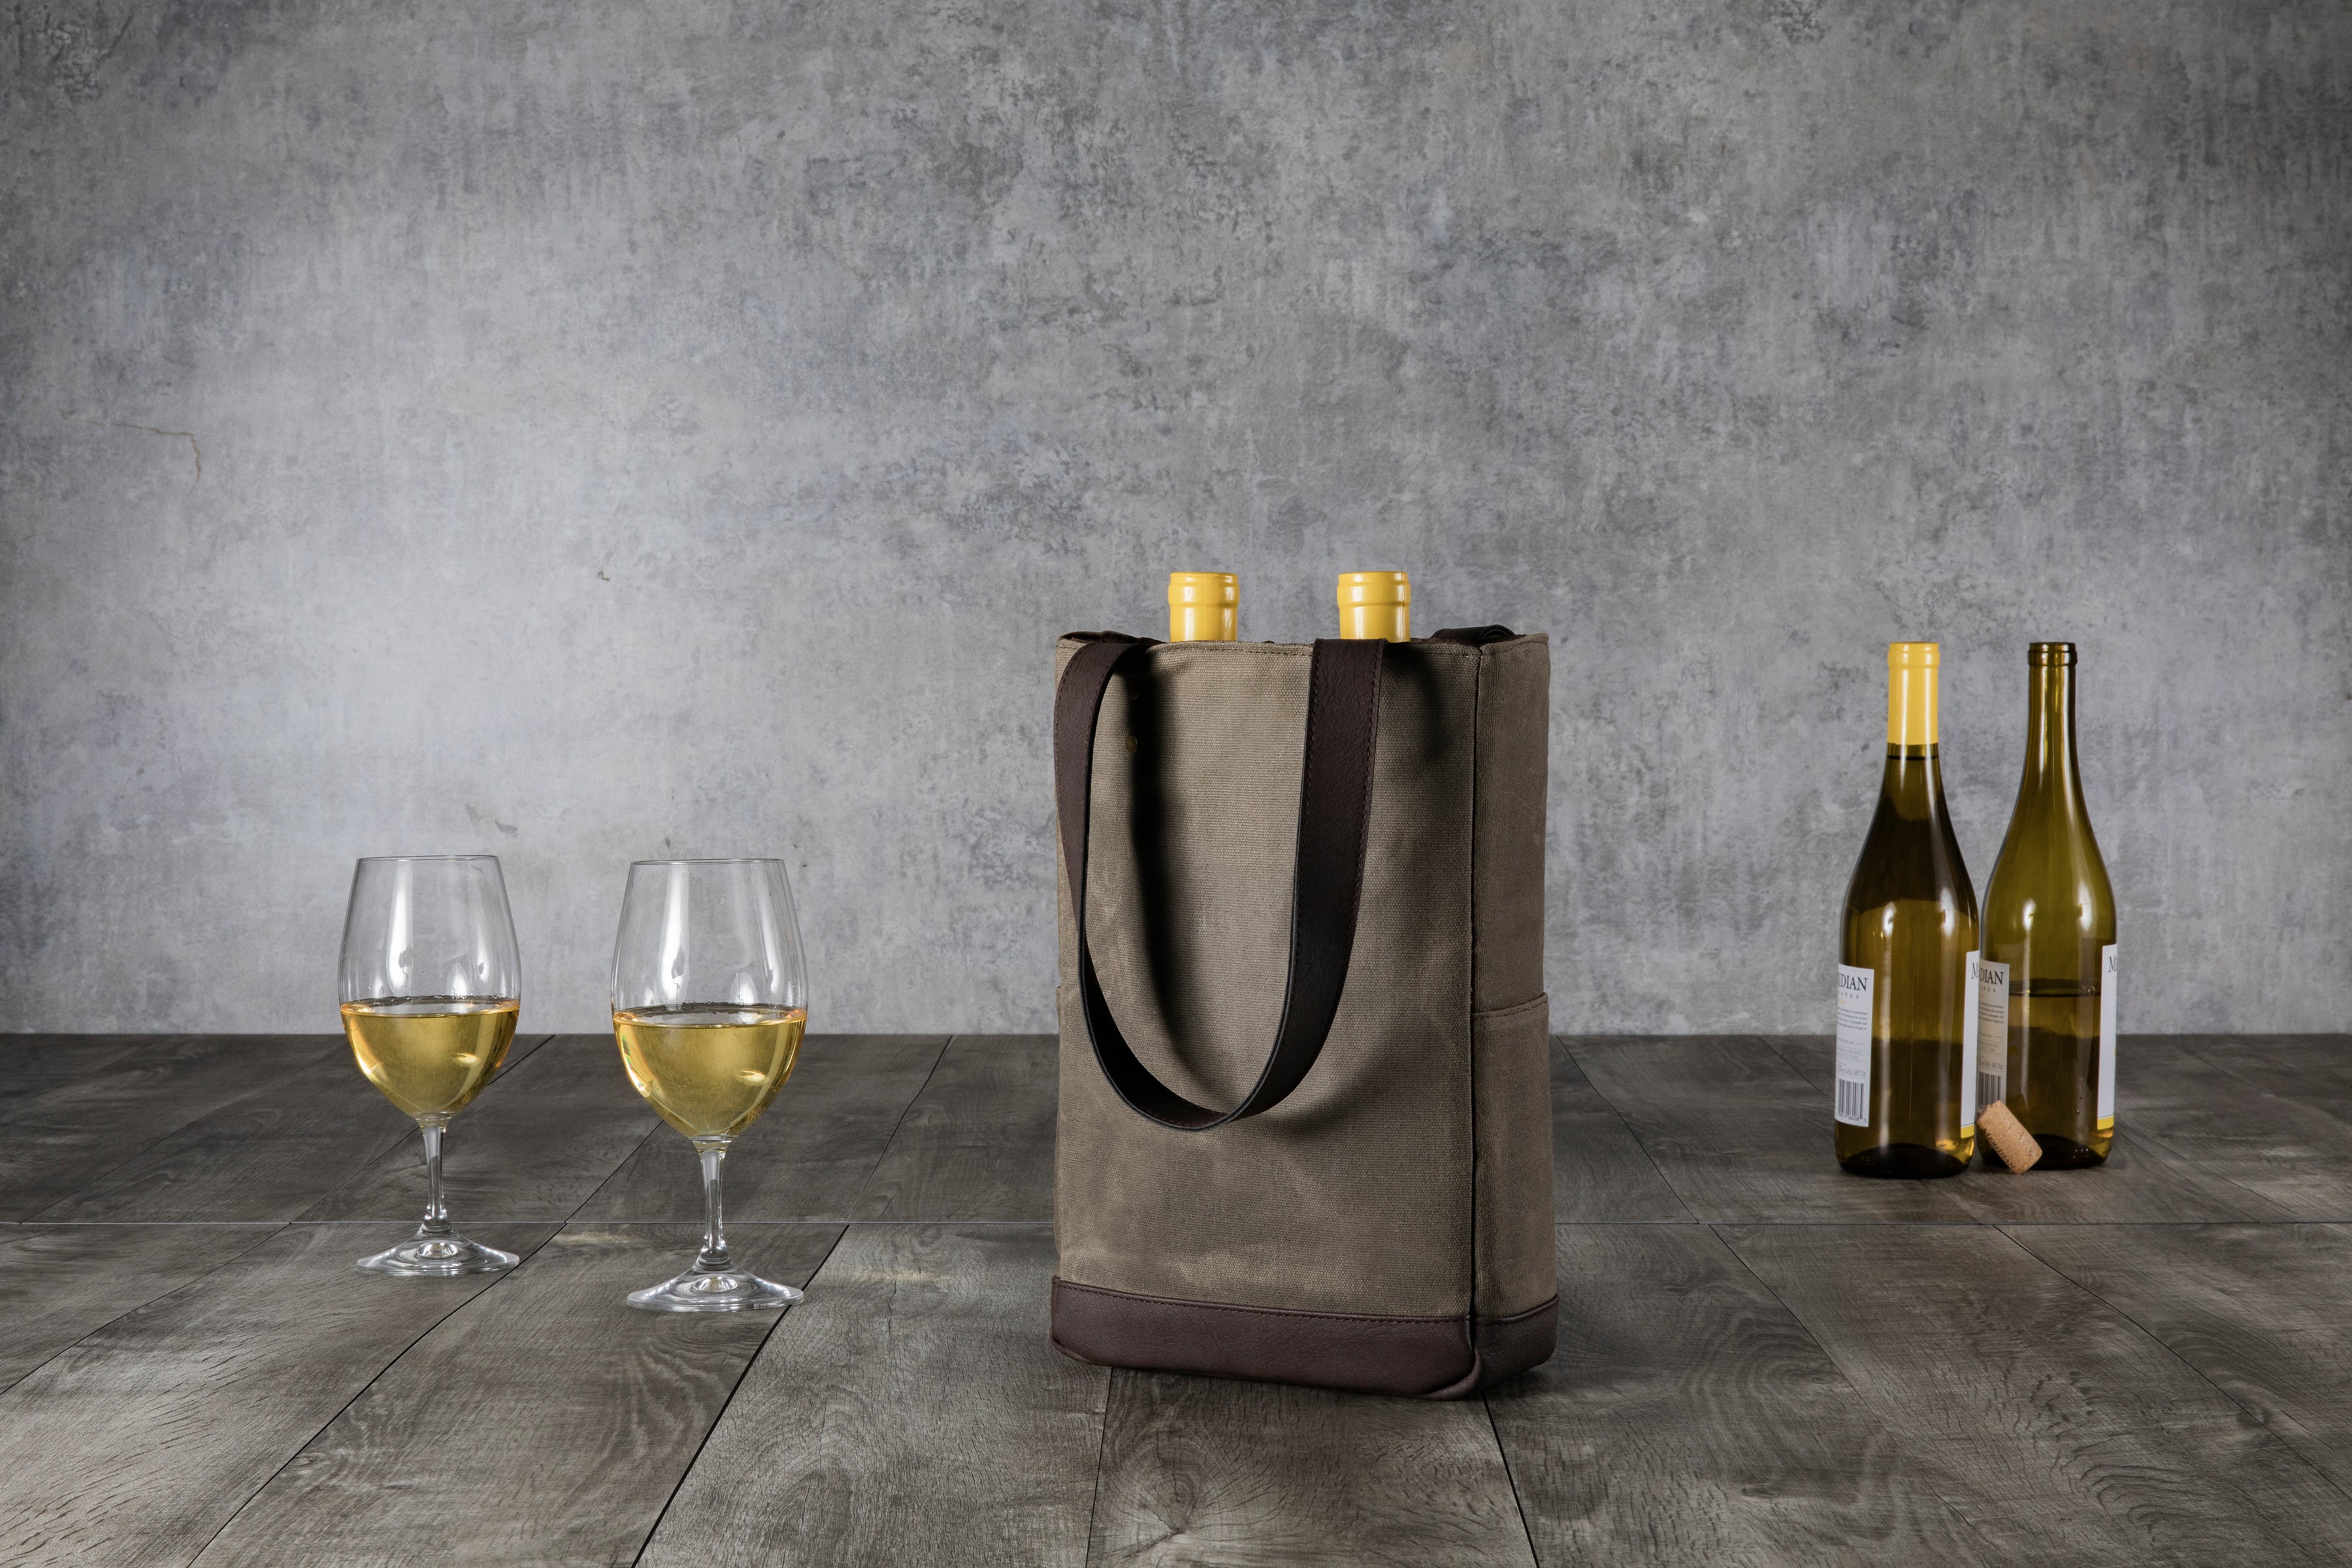 Arizona State Sun Devils - 2 Bottle Insulated Wine Cooler Bag